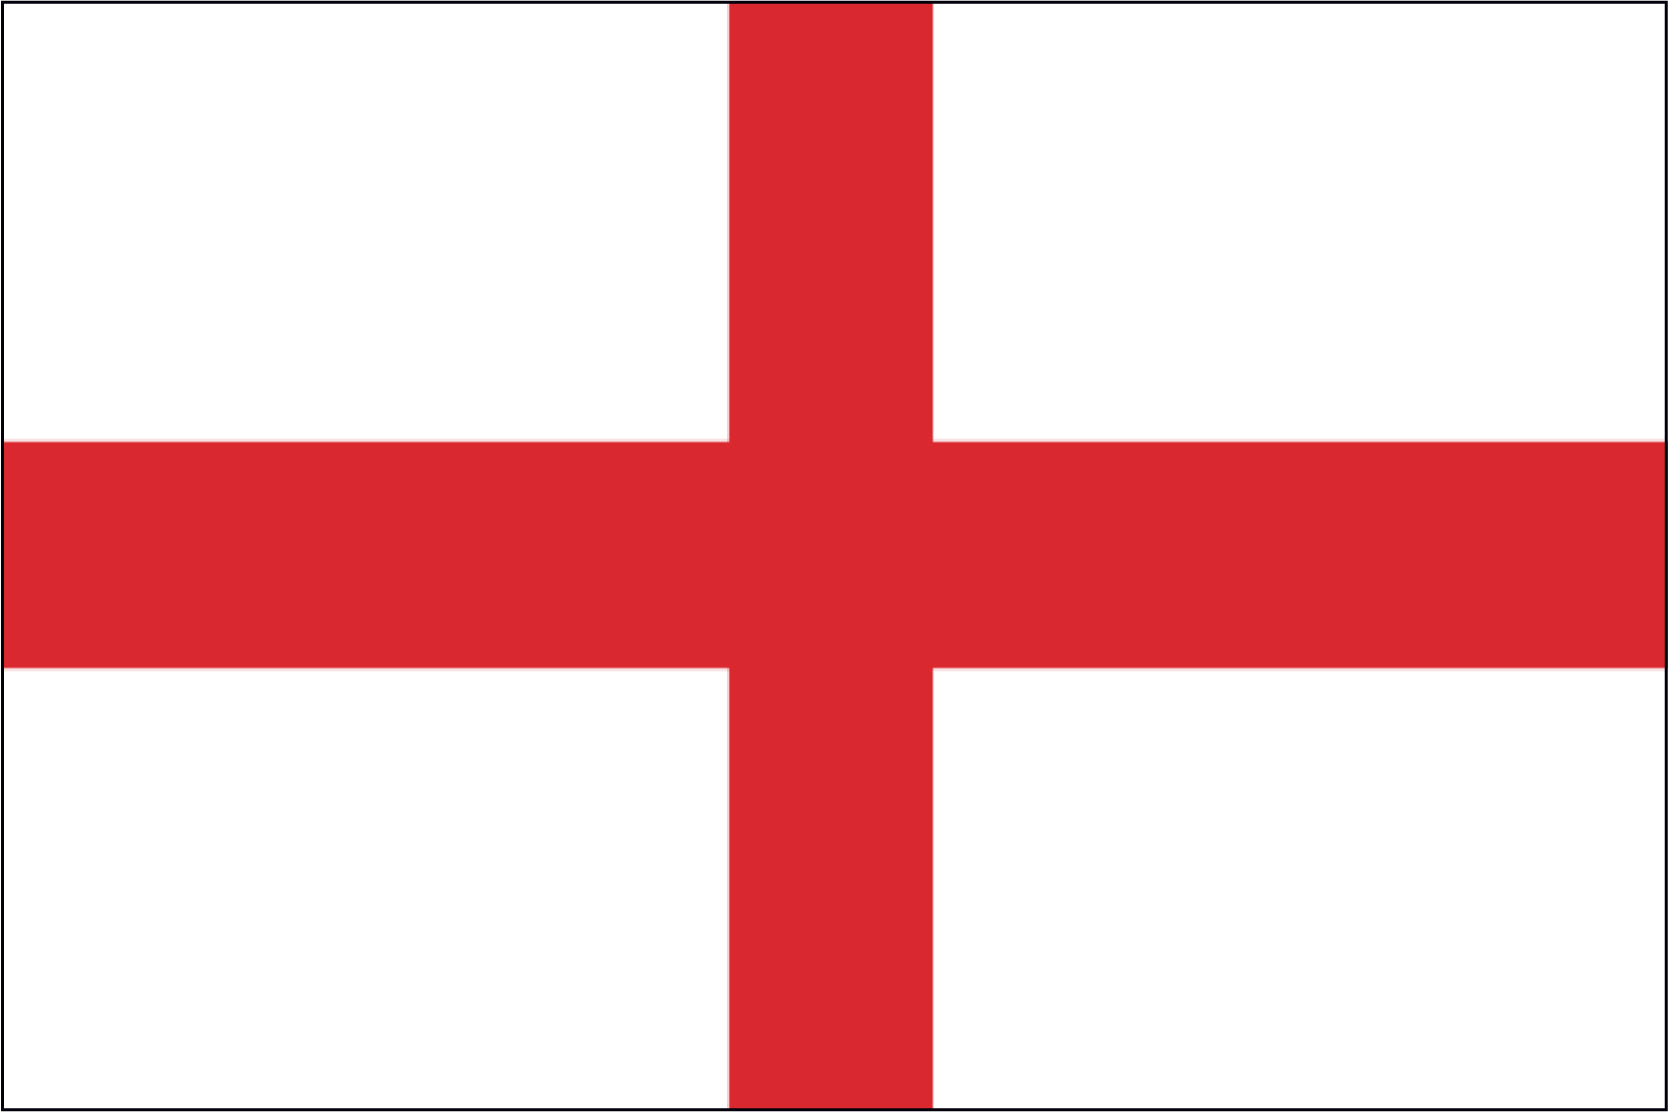 St. George's Cross 3' x 5' Flag